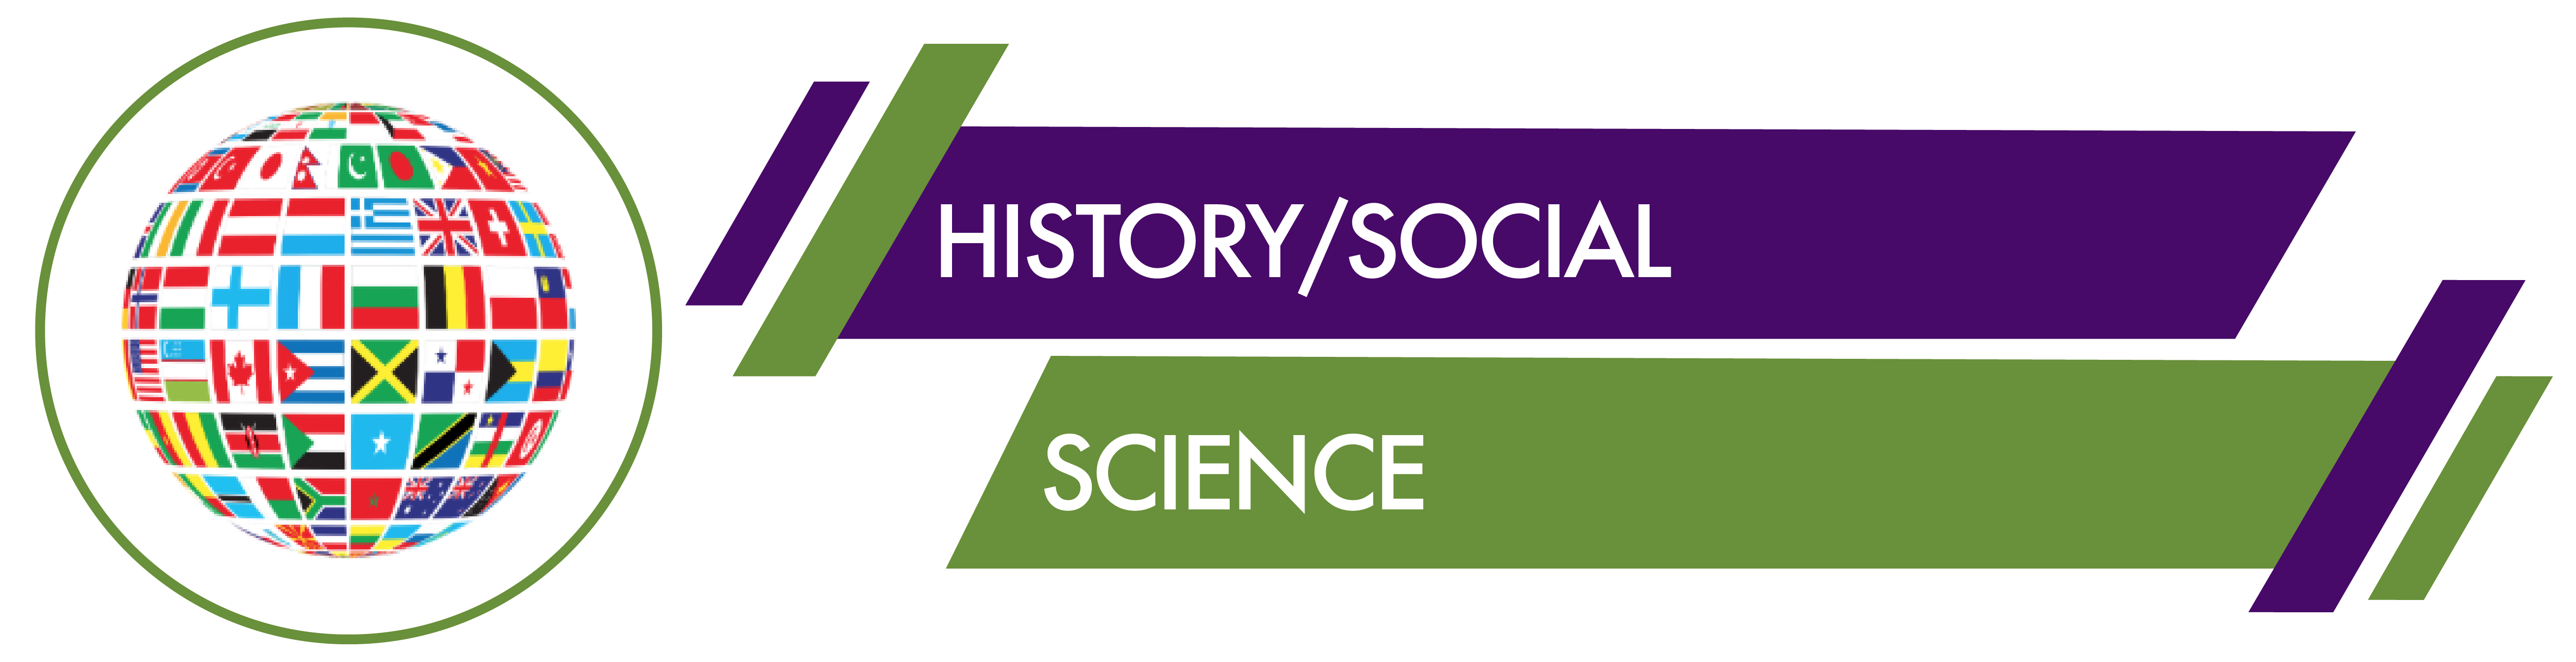 History/Social Science Banner